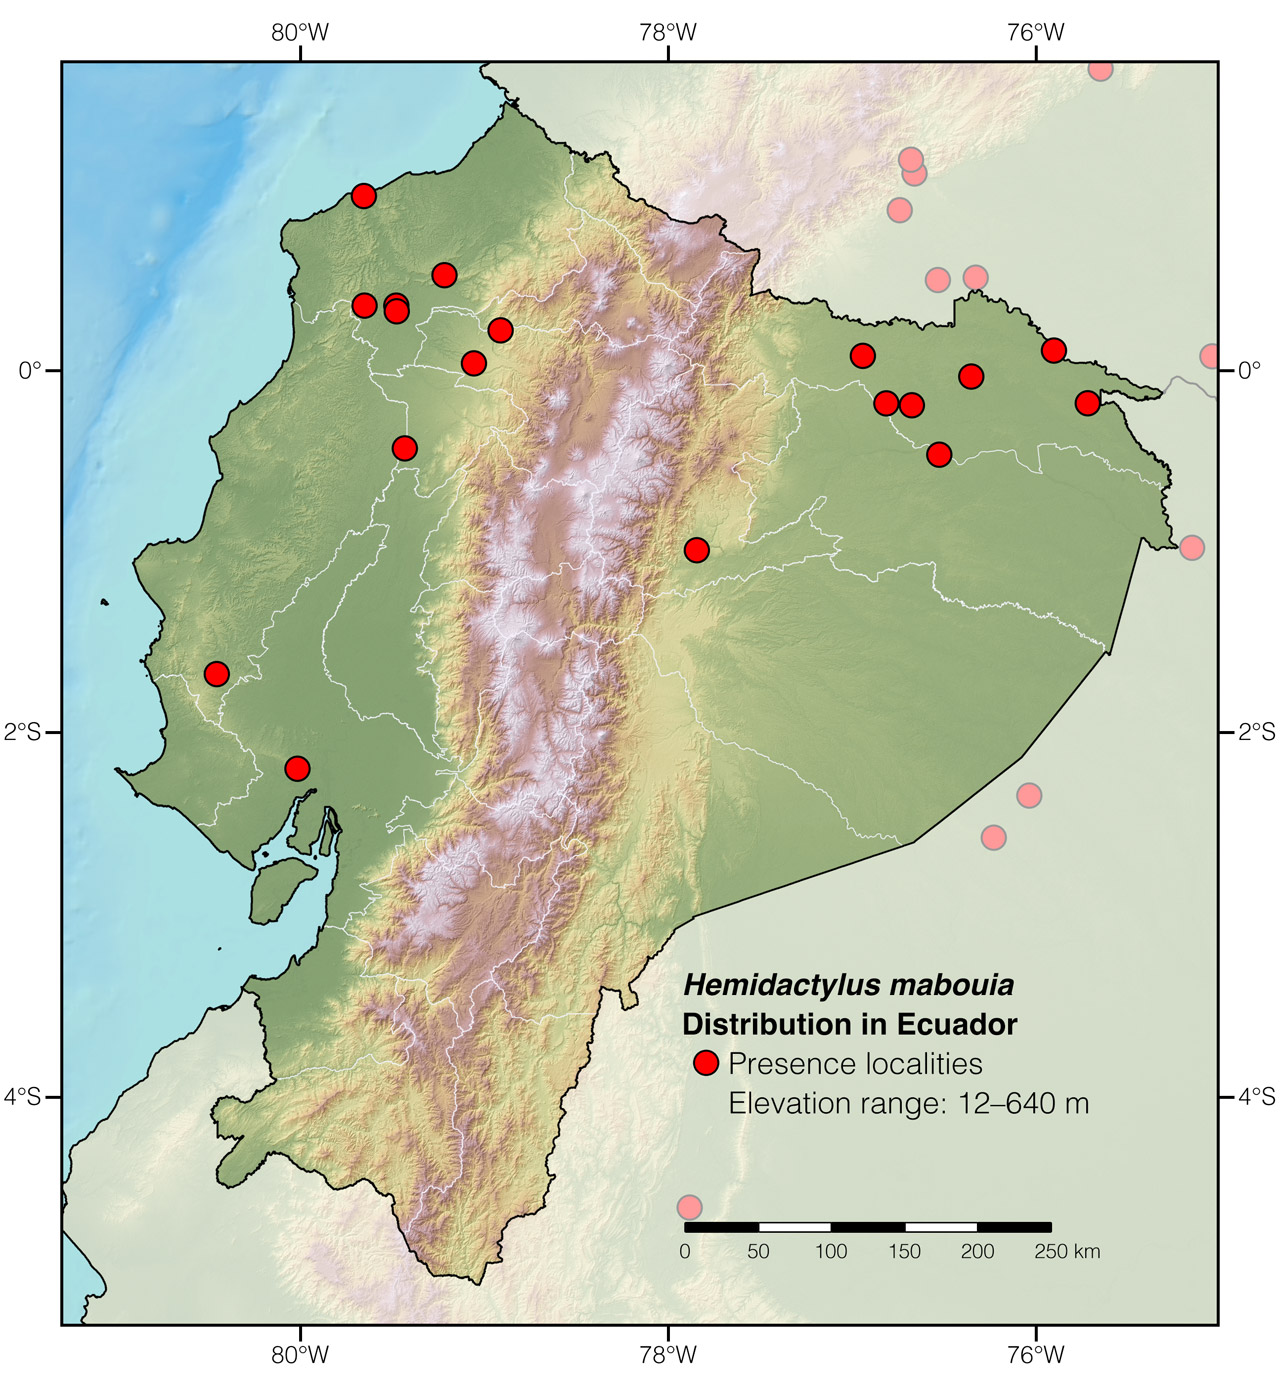 Distribution of Hemidactylus mabouia in Ecuador